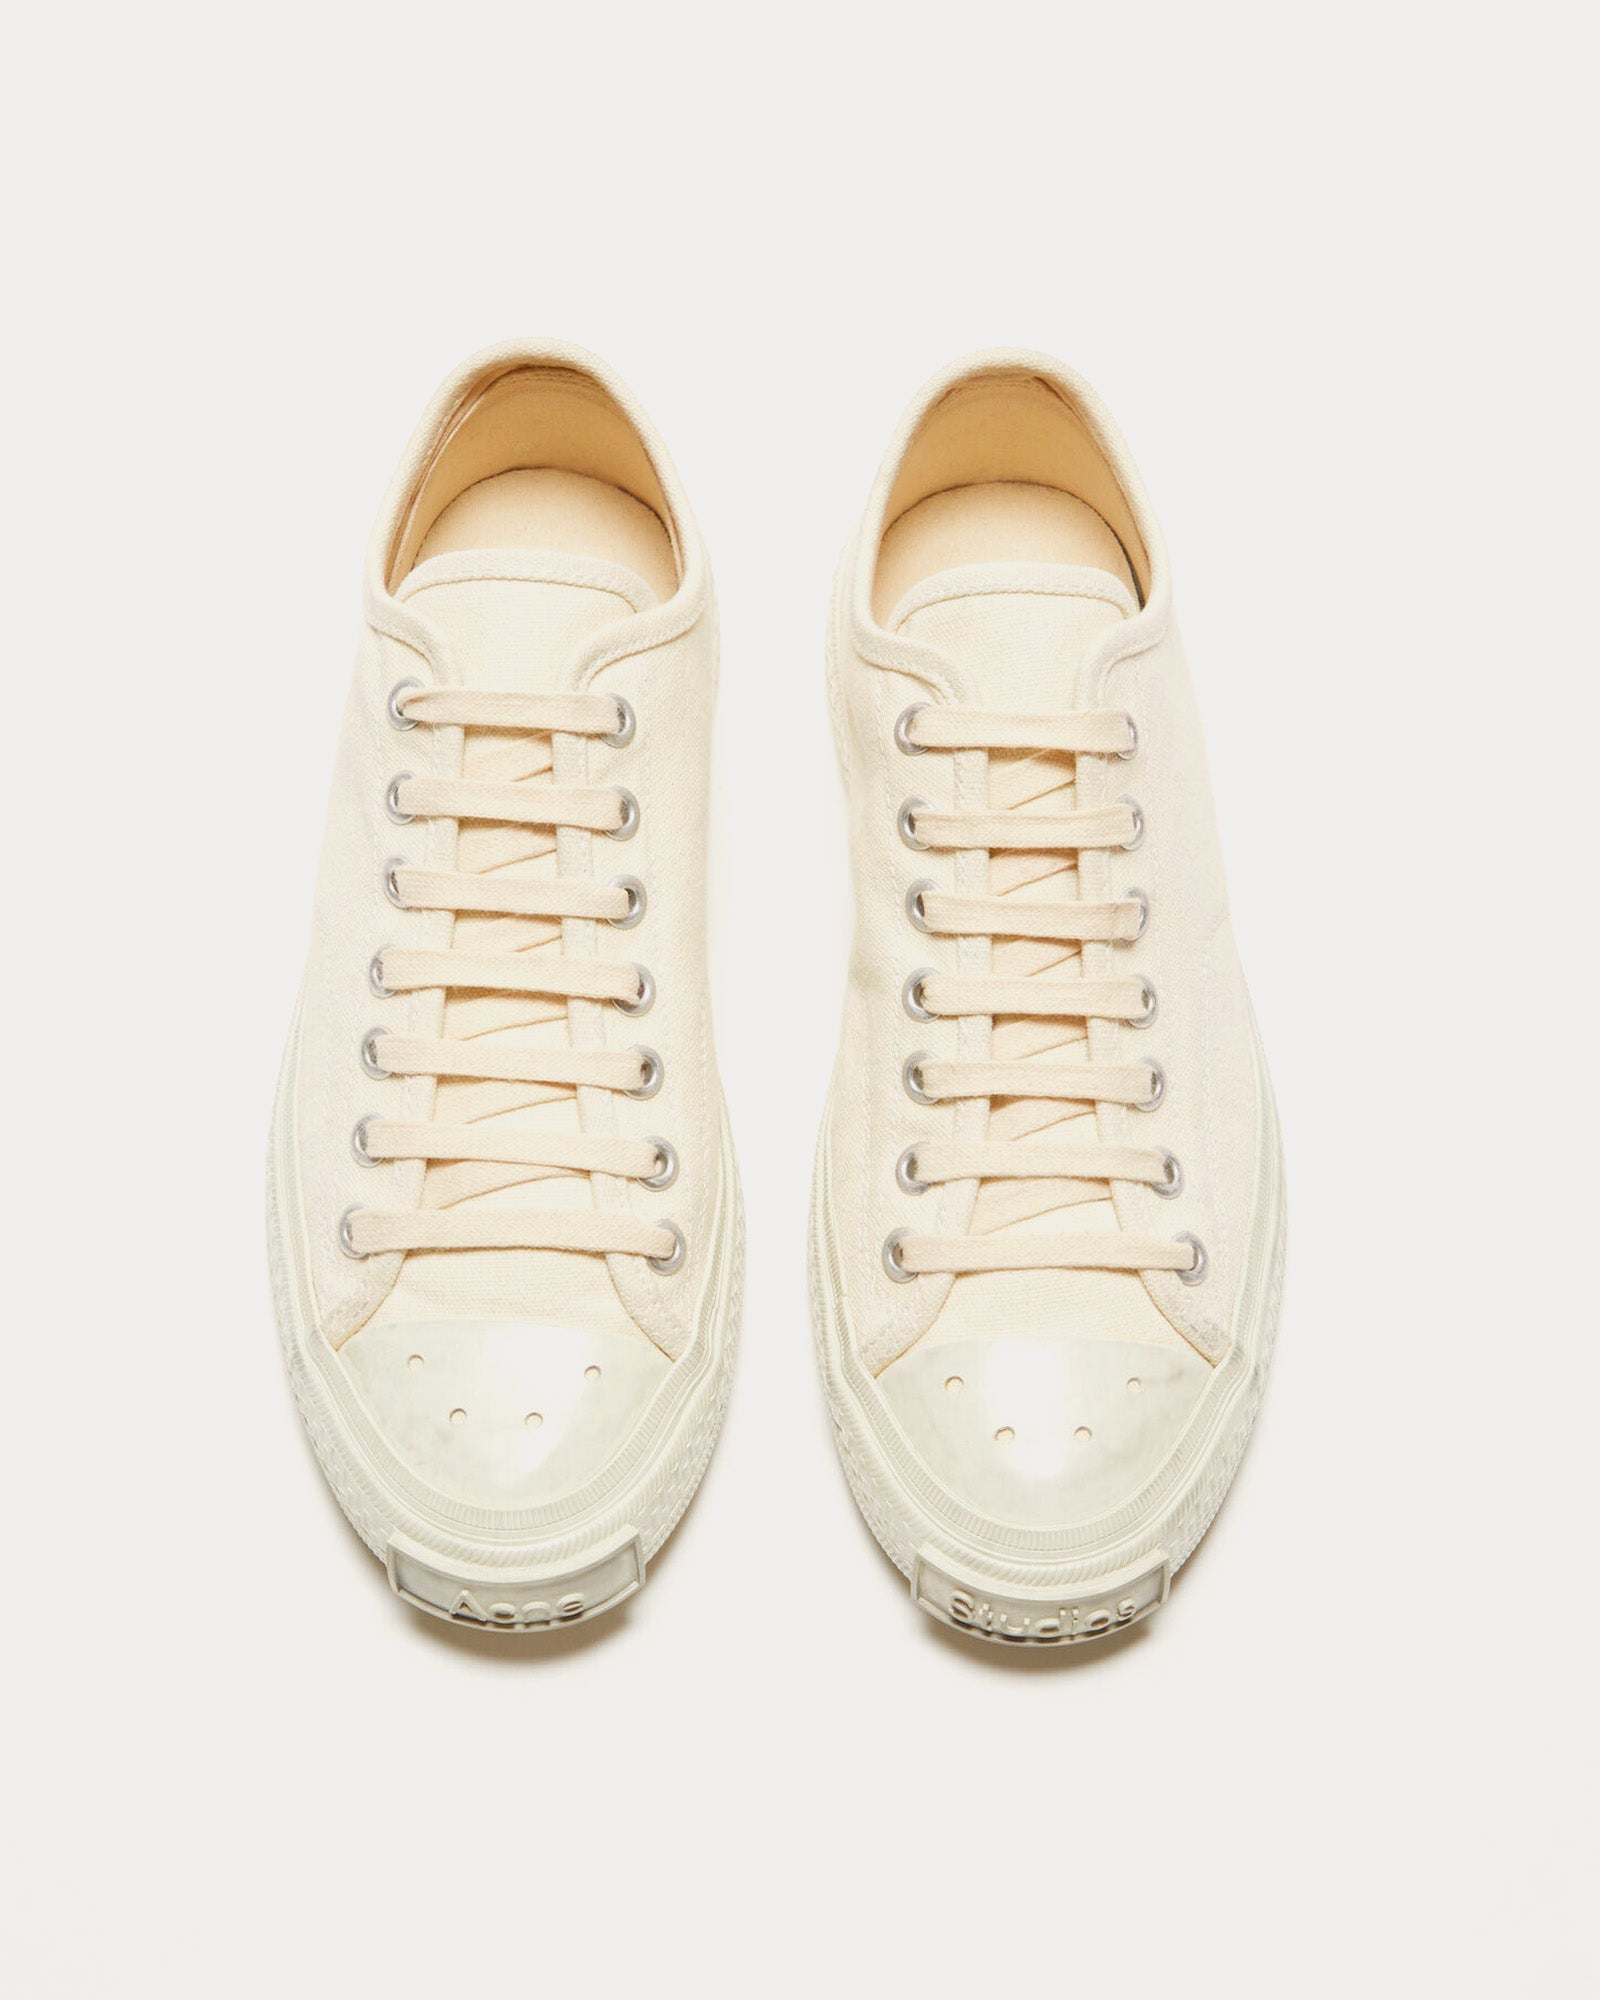 Acne Studios - Ballow Soft Tumbled White / Off White Low Top Sneakers